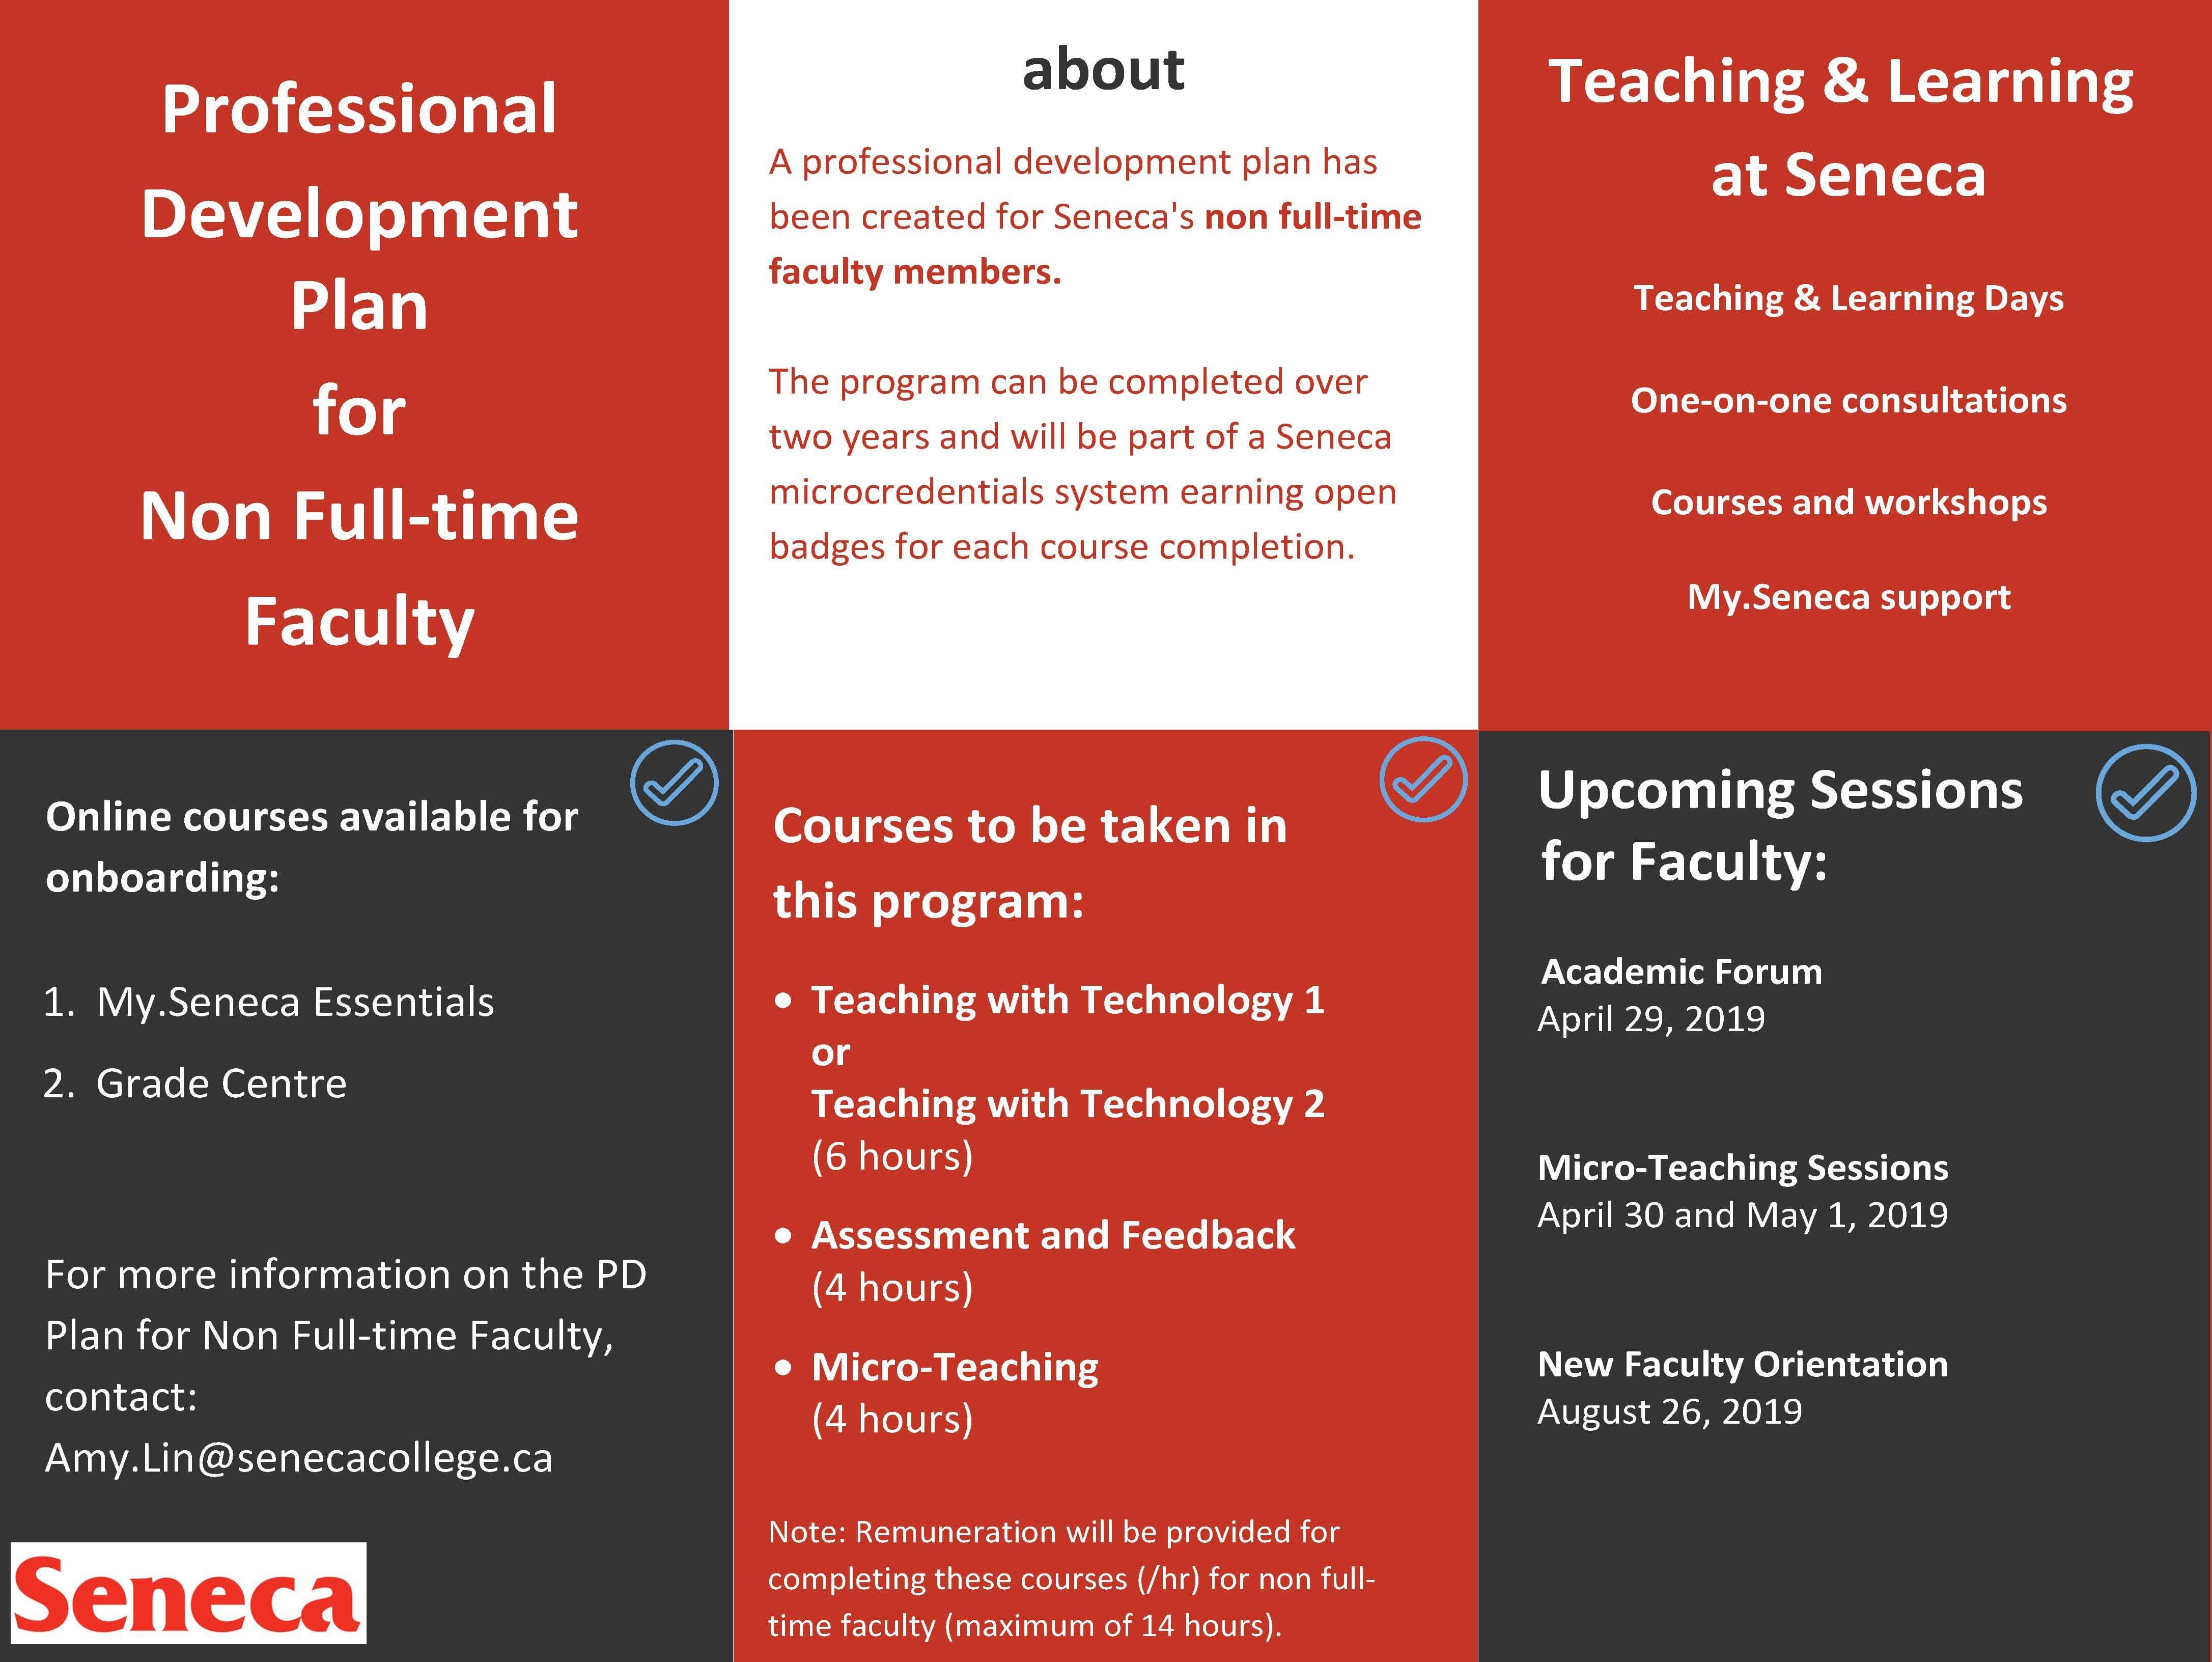 Seneca's Professional Development Plan for Non Full-time Faculty